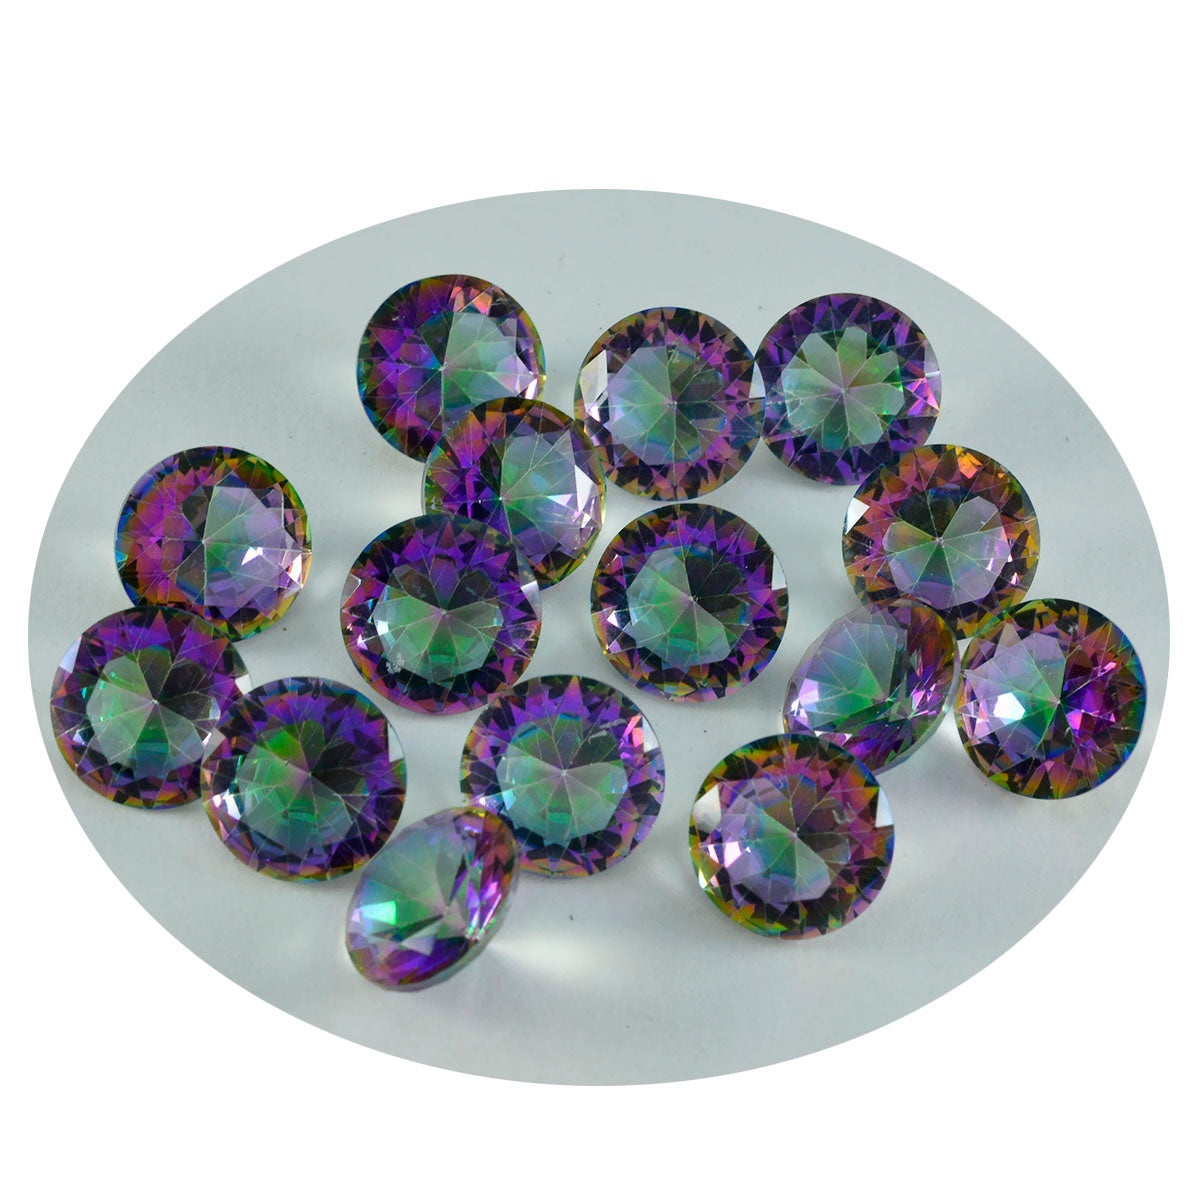 Riyogems 1PC Multi Color Mystic Quartz Faceted 8x8 mm Round Shape amazing Quality Gemstone